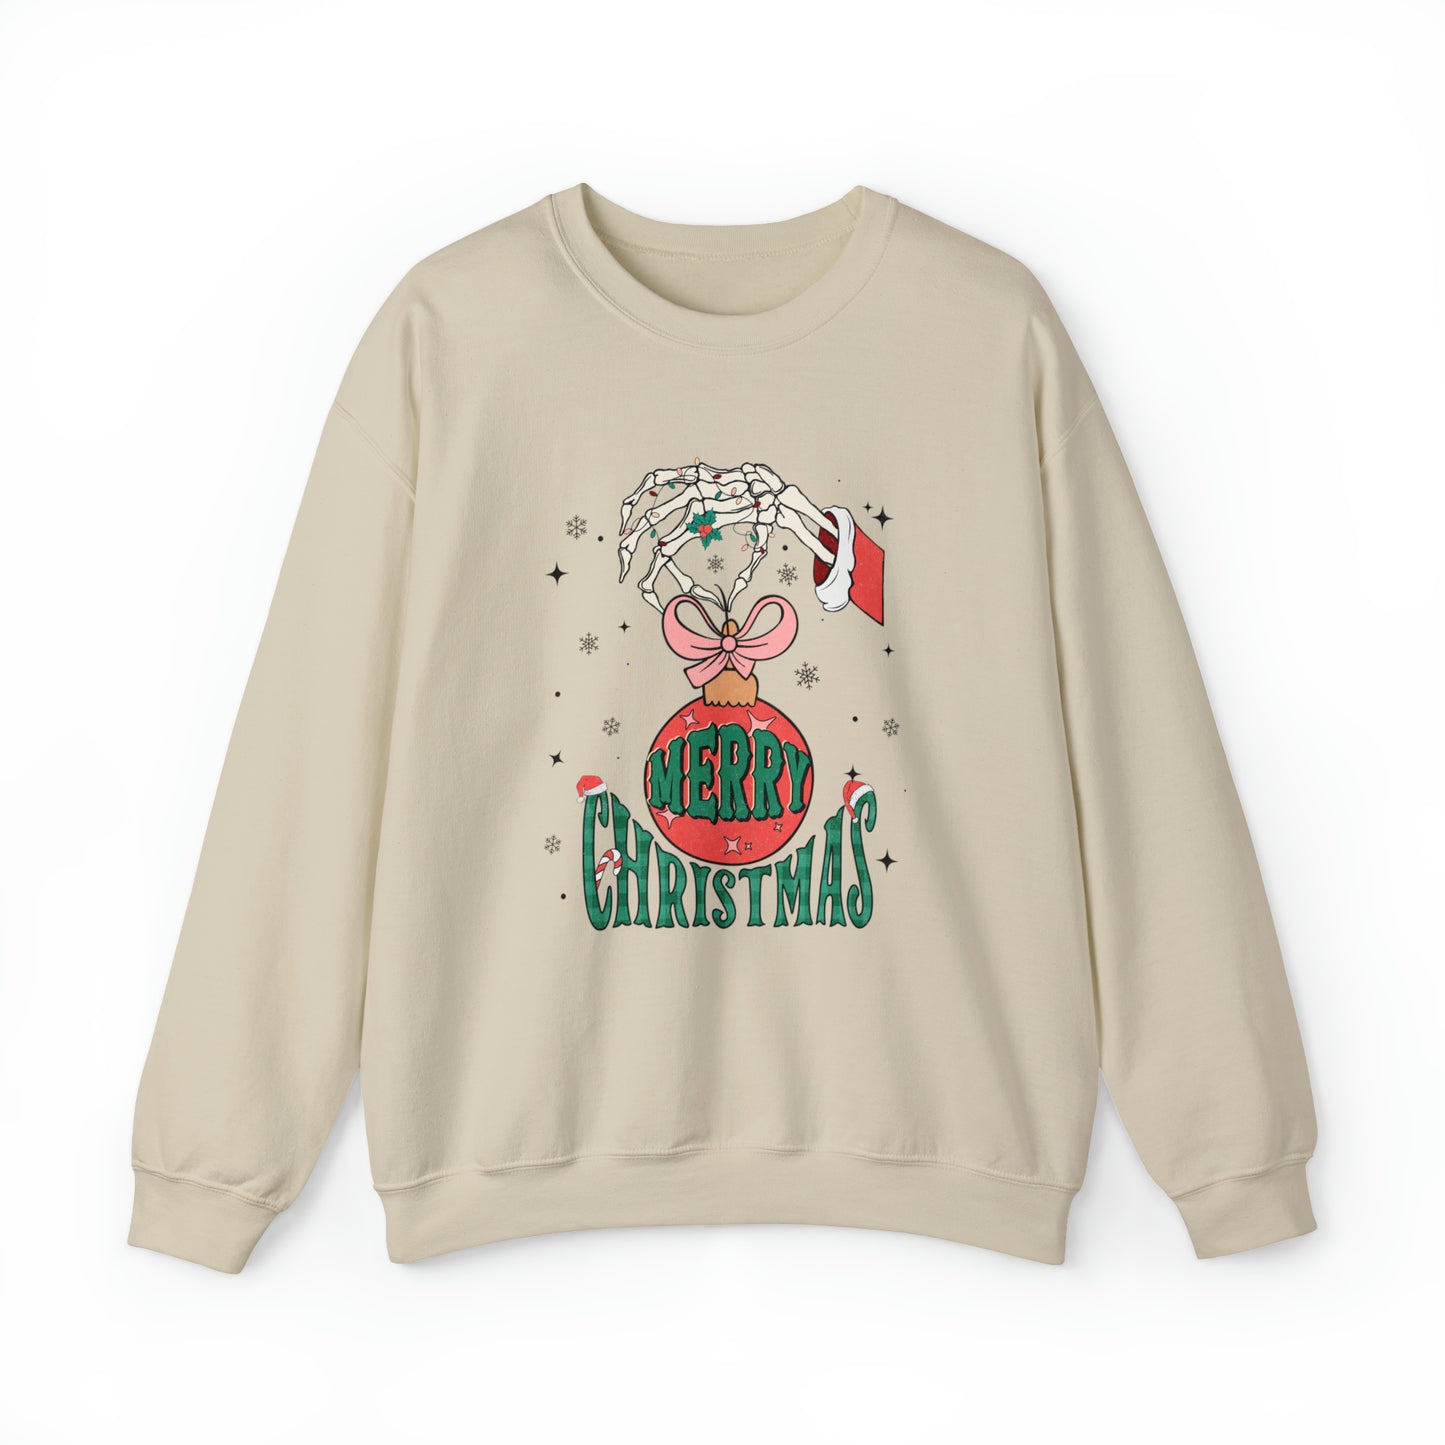 Skeleton Hand and Ornament Women's Christmas Sweatshirt